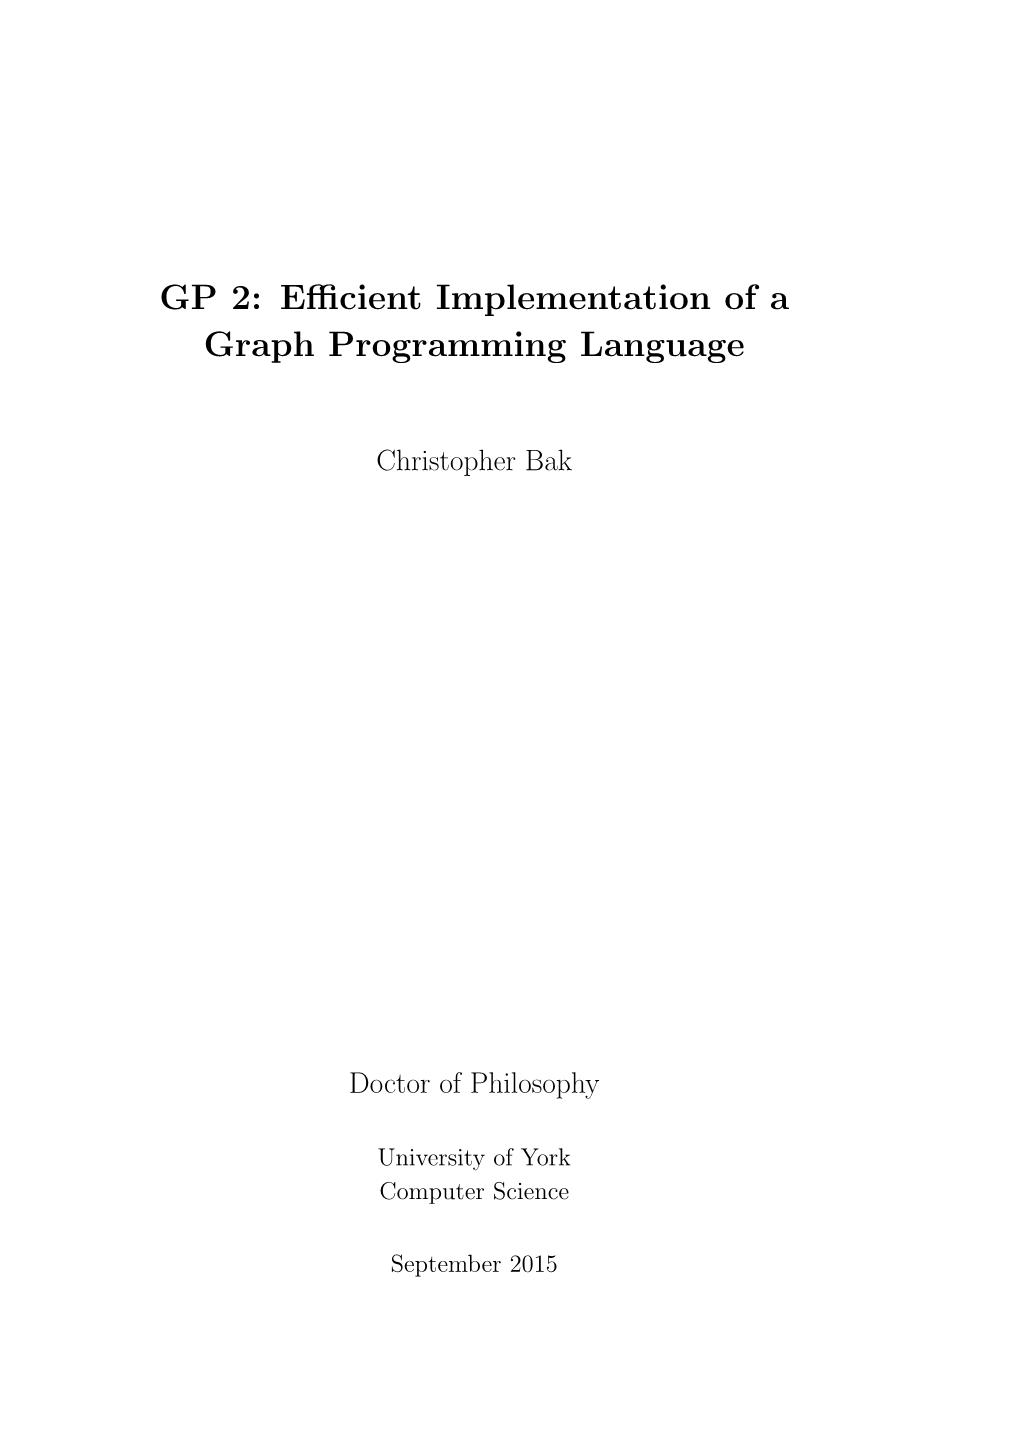 GP 2: Efficient Implementation of a Graph Programming Language